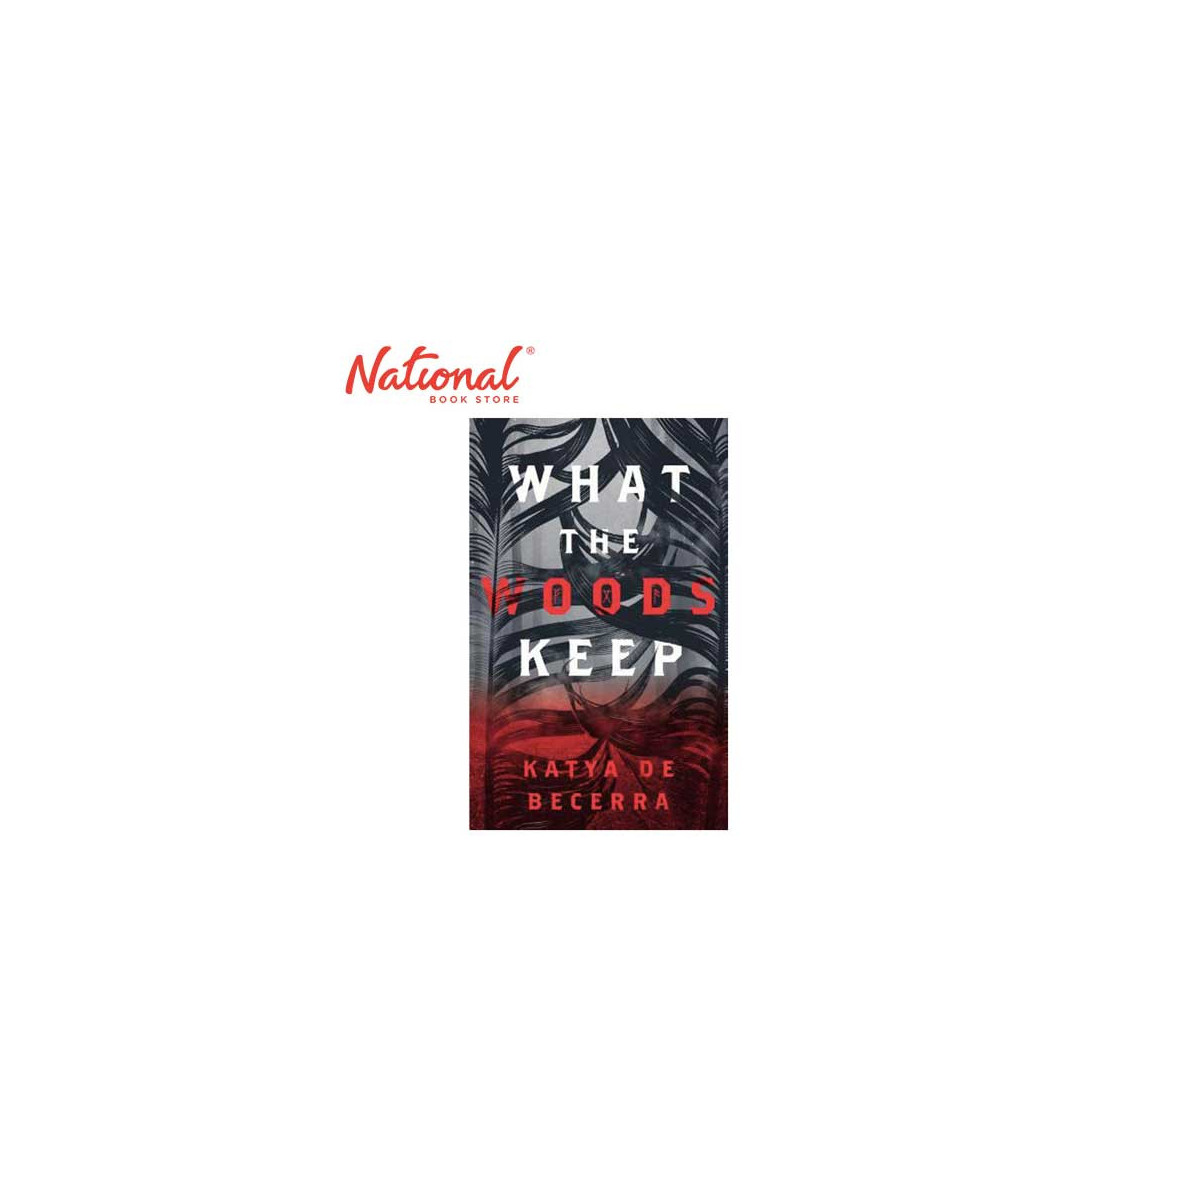 What The Woods Keep by Katya de Becerra - Hardcover - Teens - Thriller - Mystery - Suspense